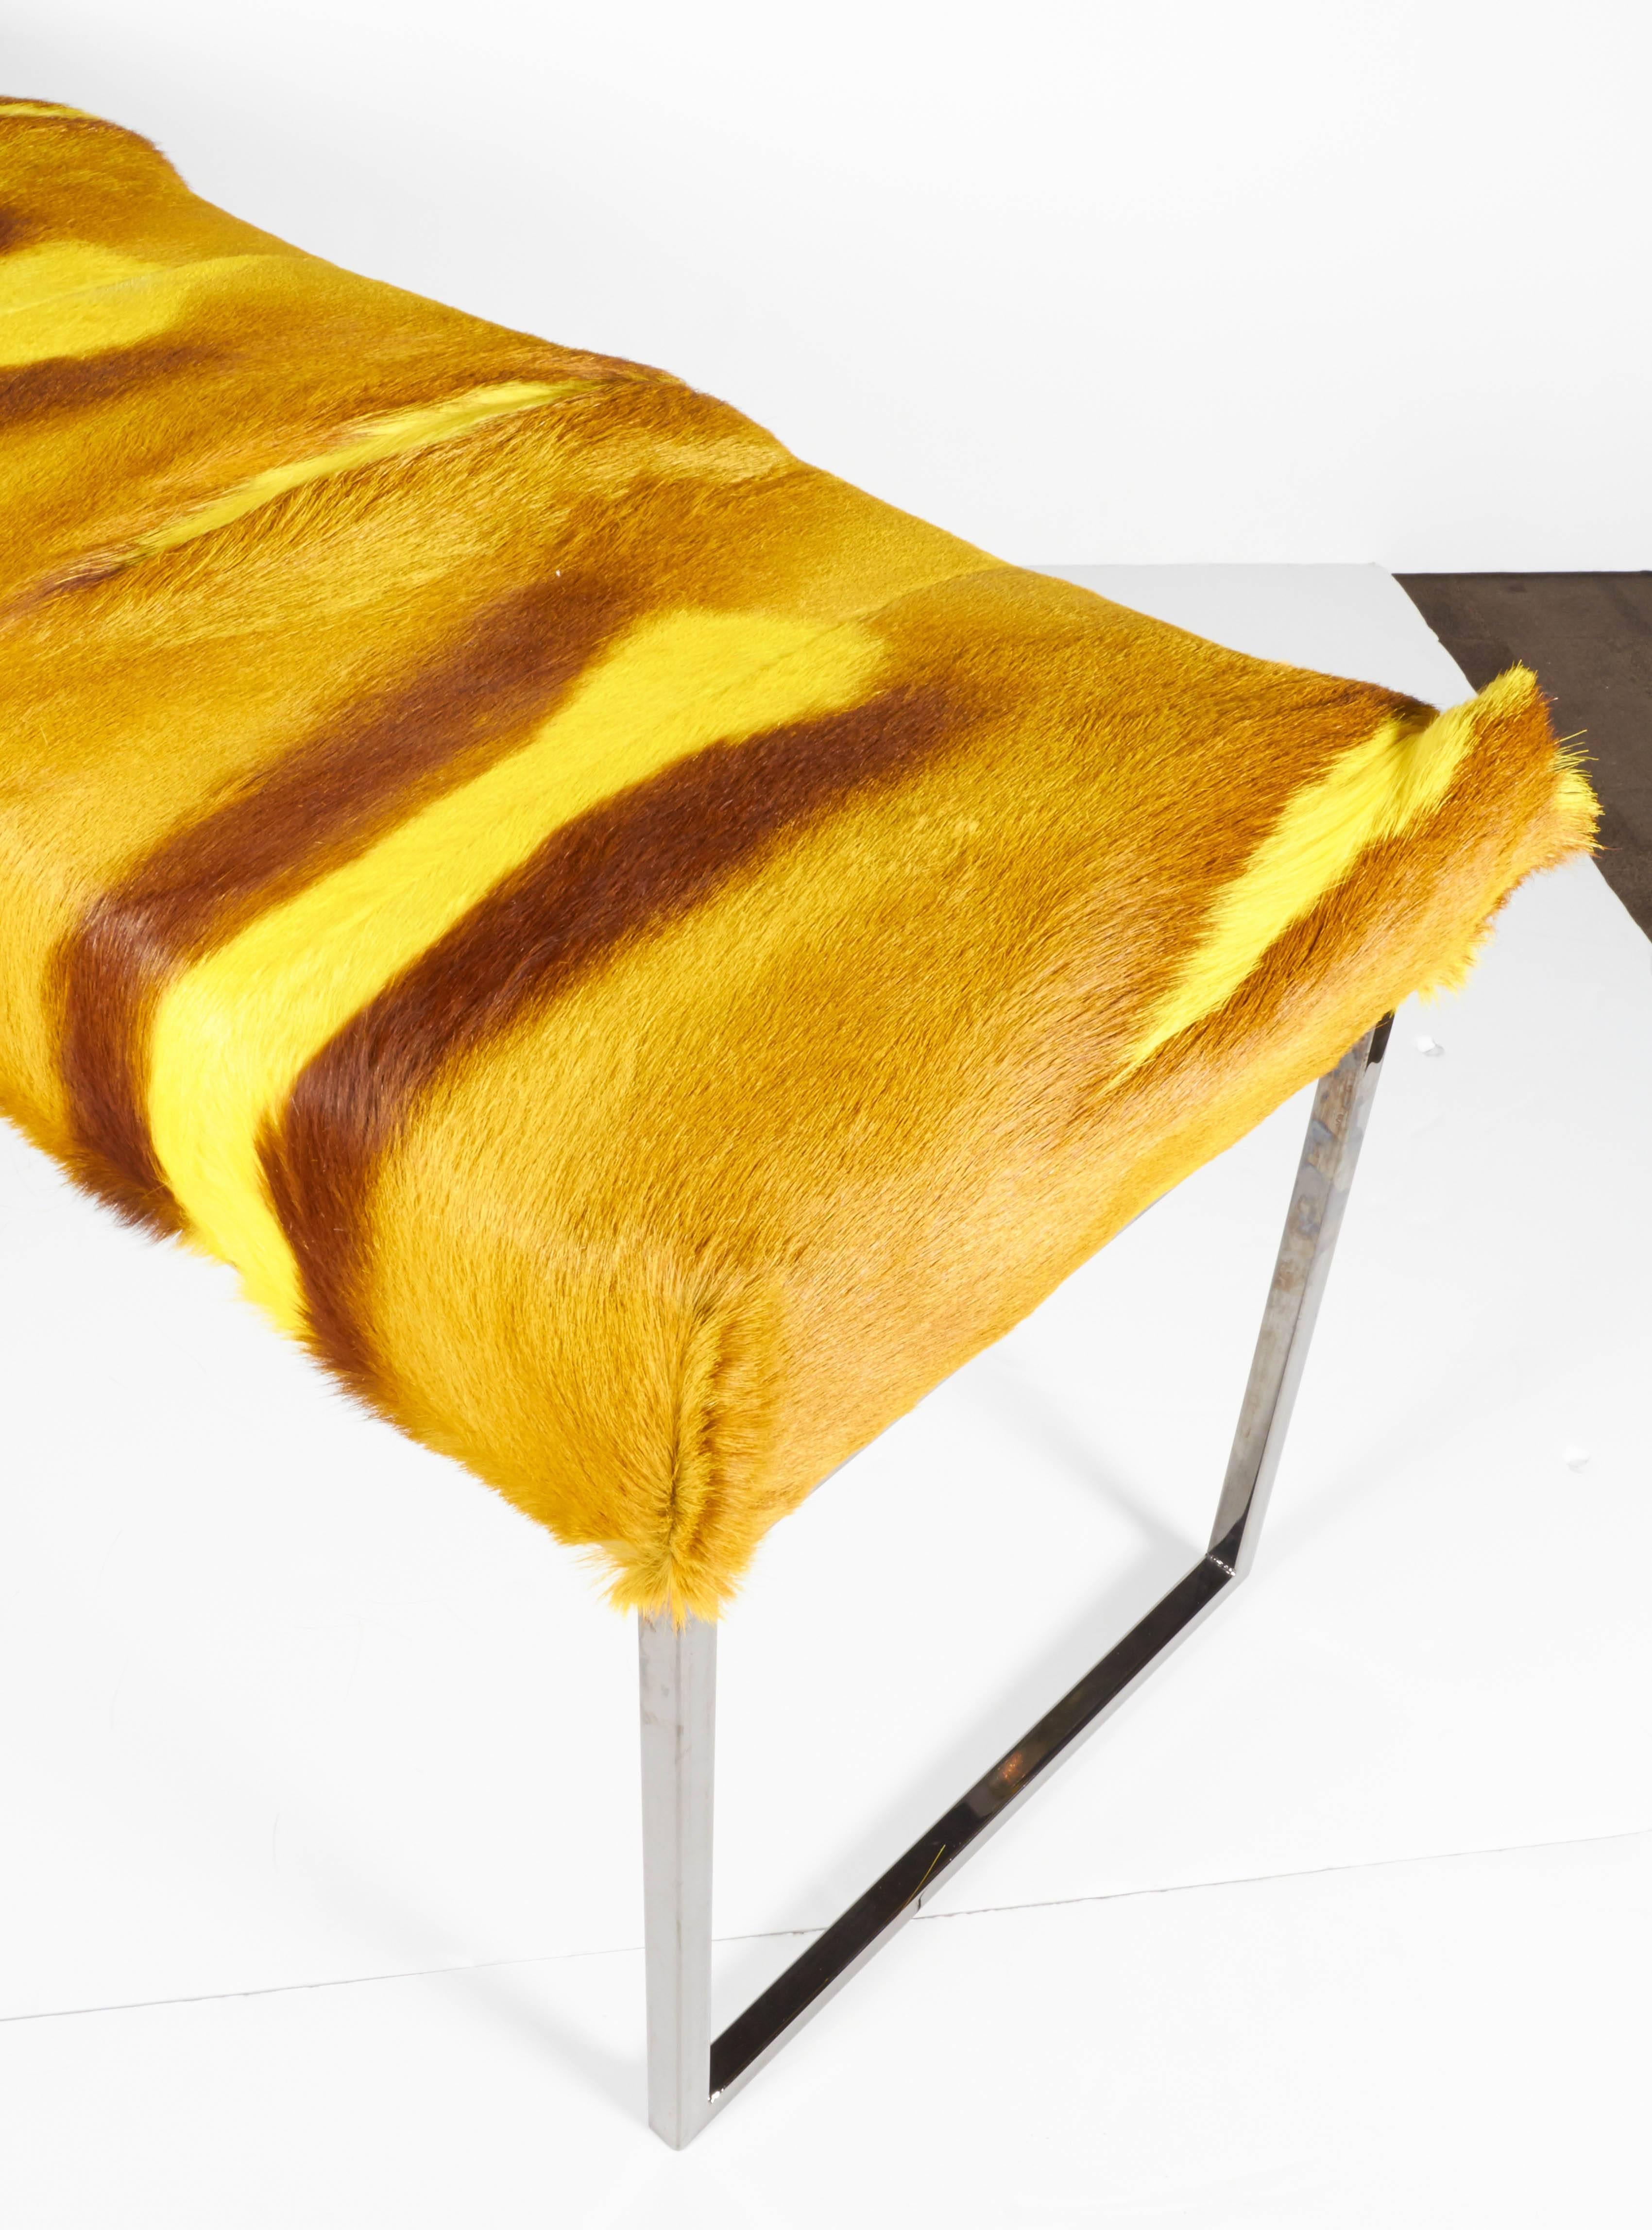 Dyed Organic Modern African Springbok Fur Bench in Vibrant Yellow